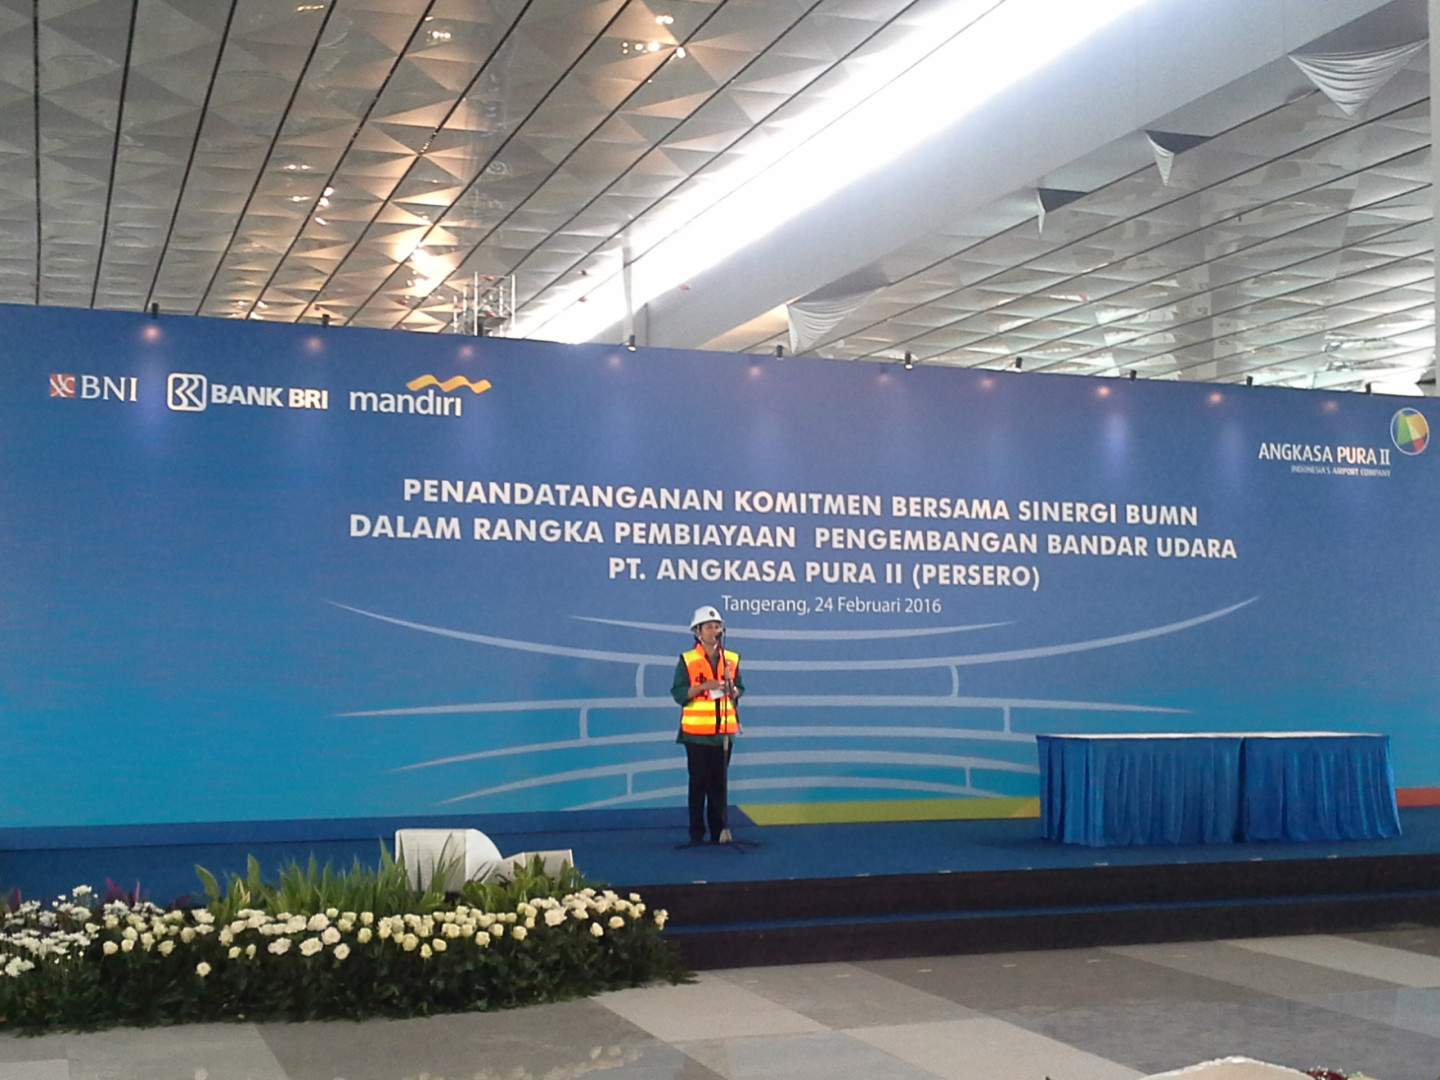 Minister of SOE Visits Ultimate Terminal 3 Soekarno-Hatta International Airport Image